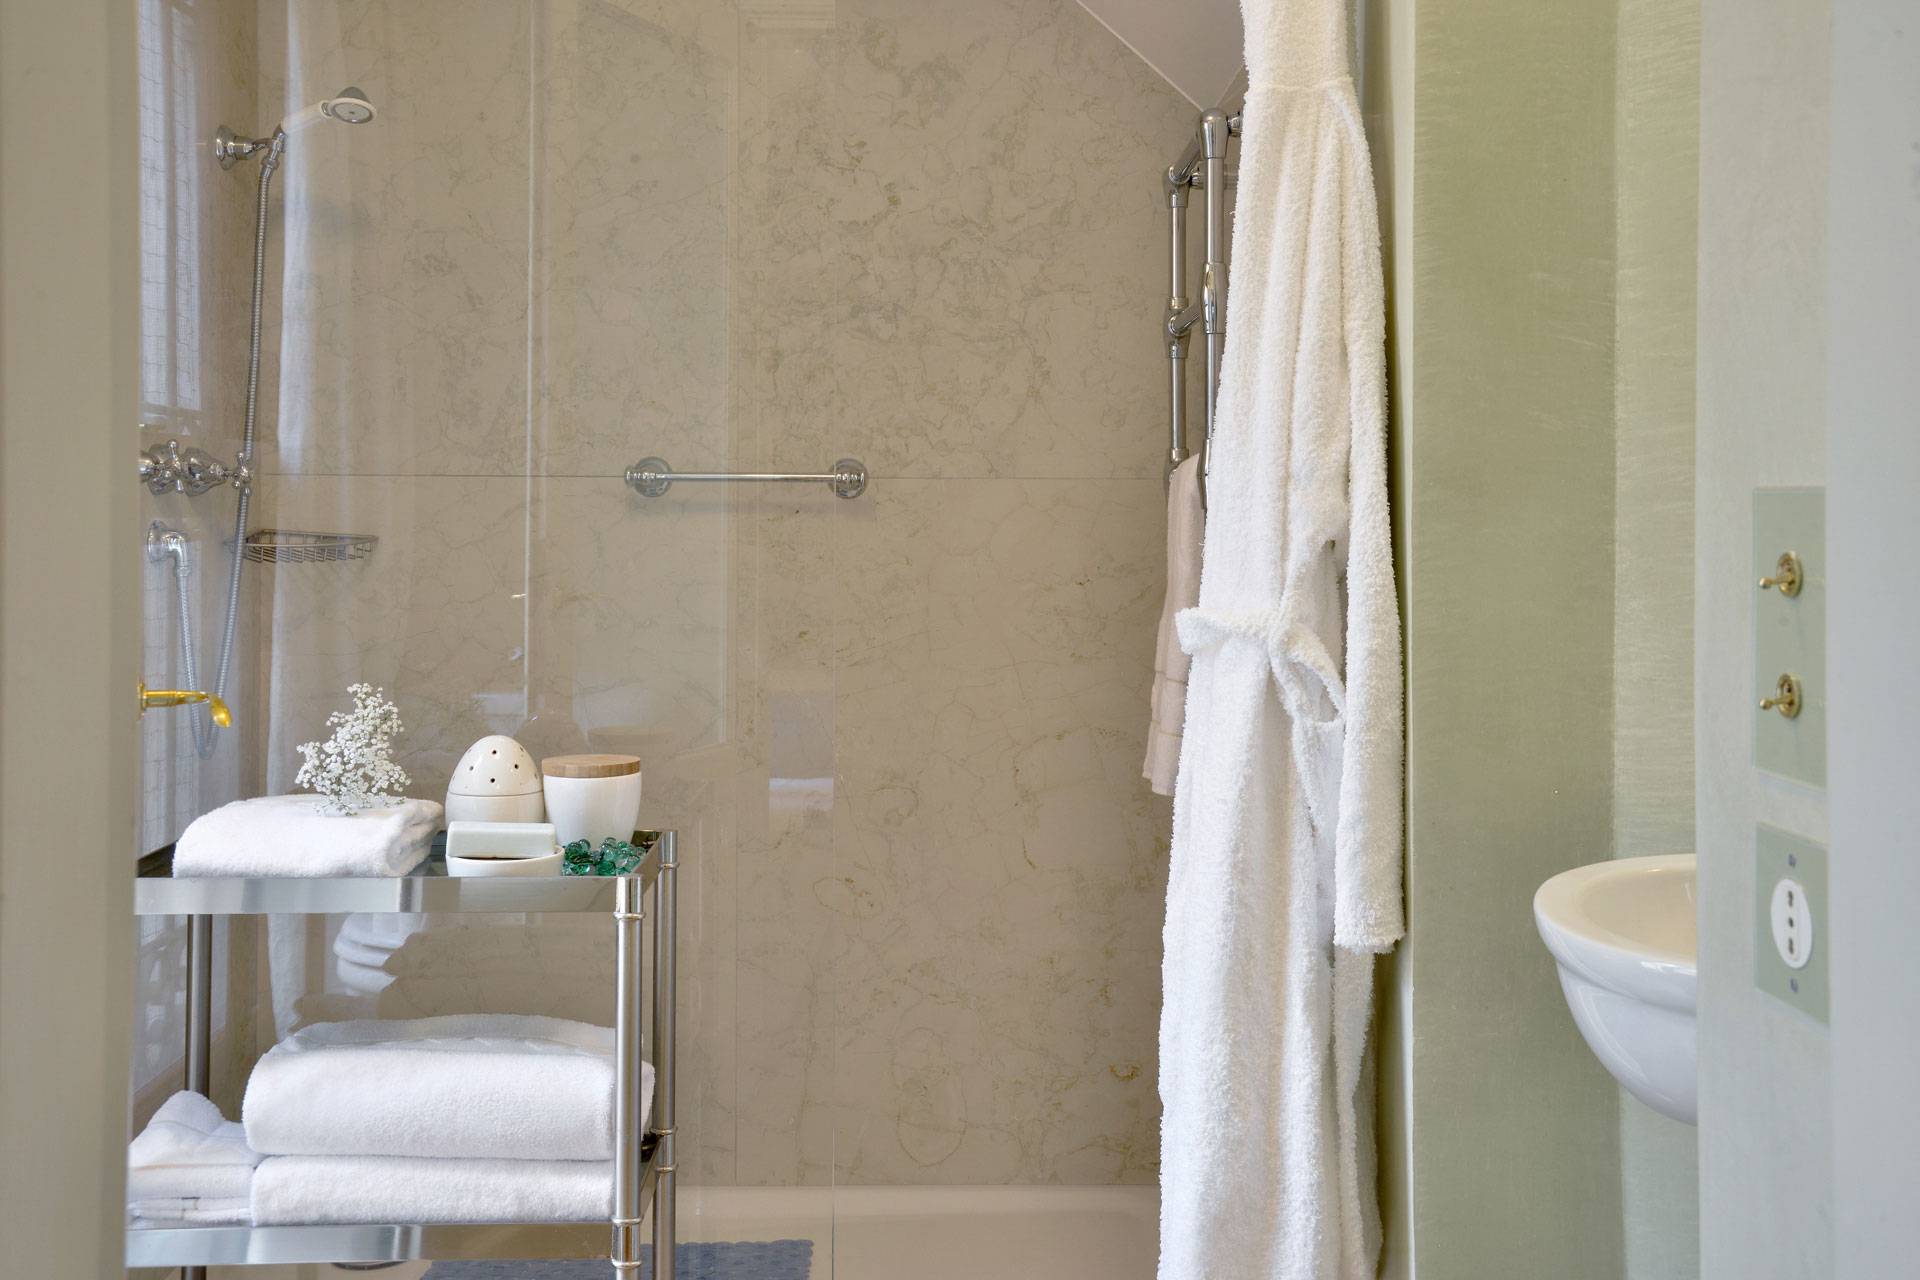 en-suite bathroom in marble with shower